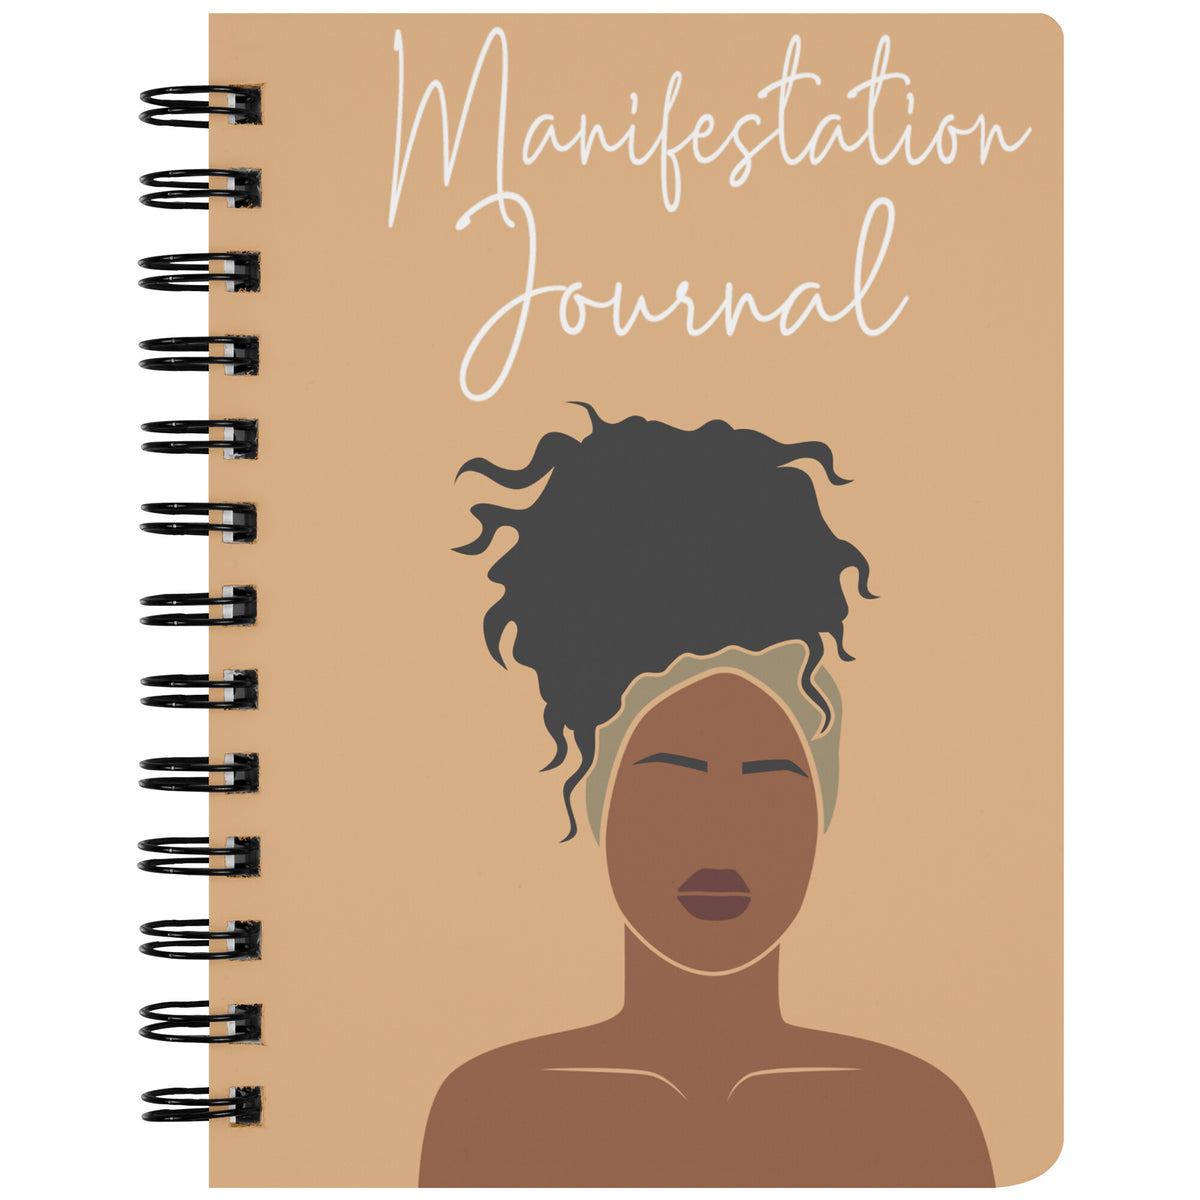 Manifestation Journal